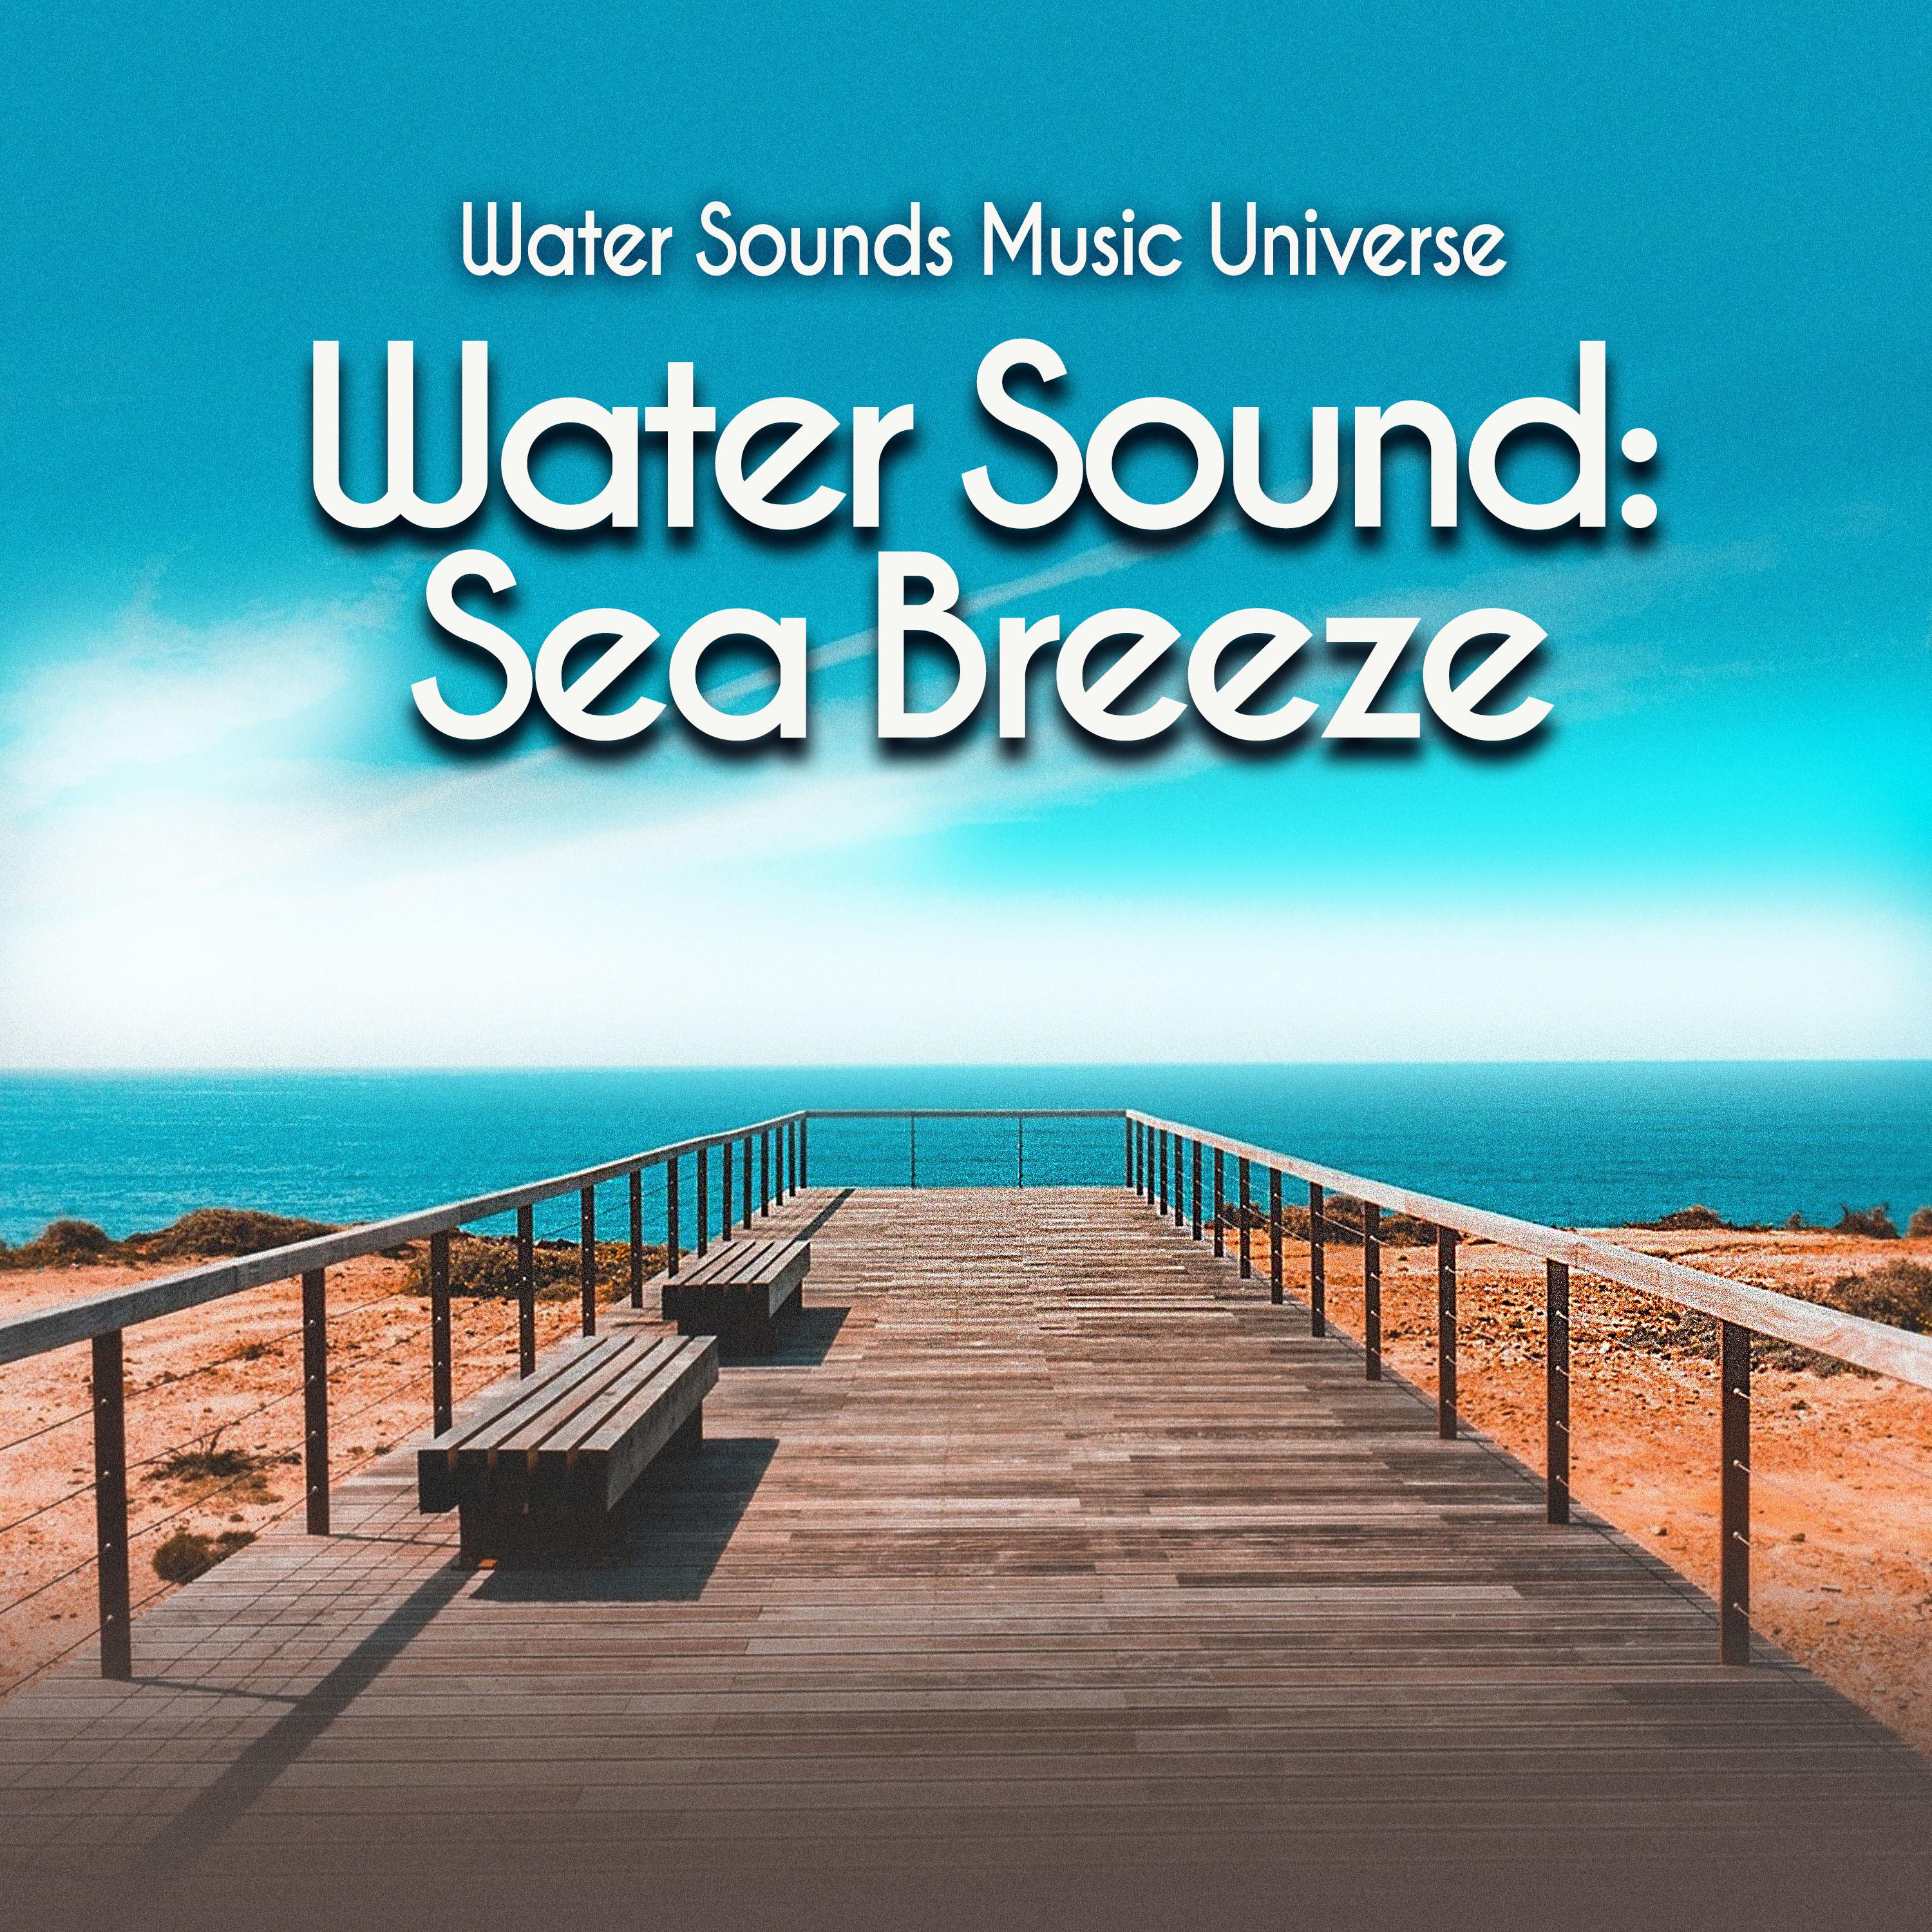 Water Sound: Sea Breeze